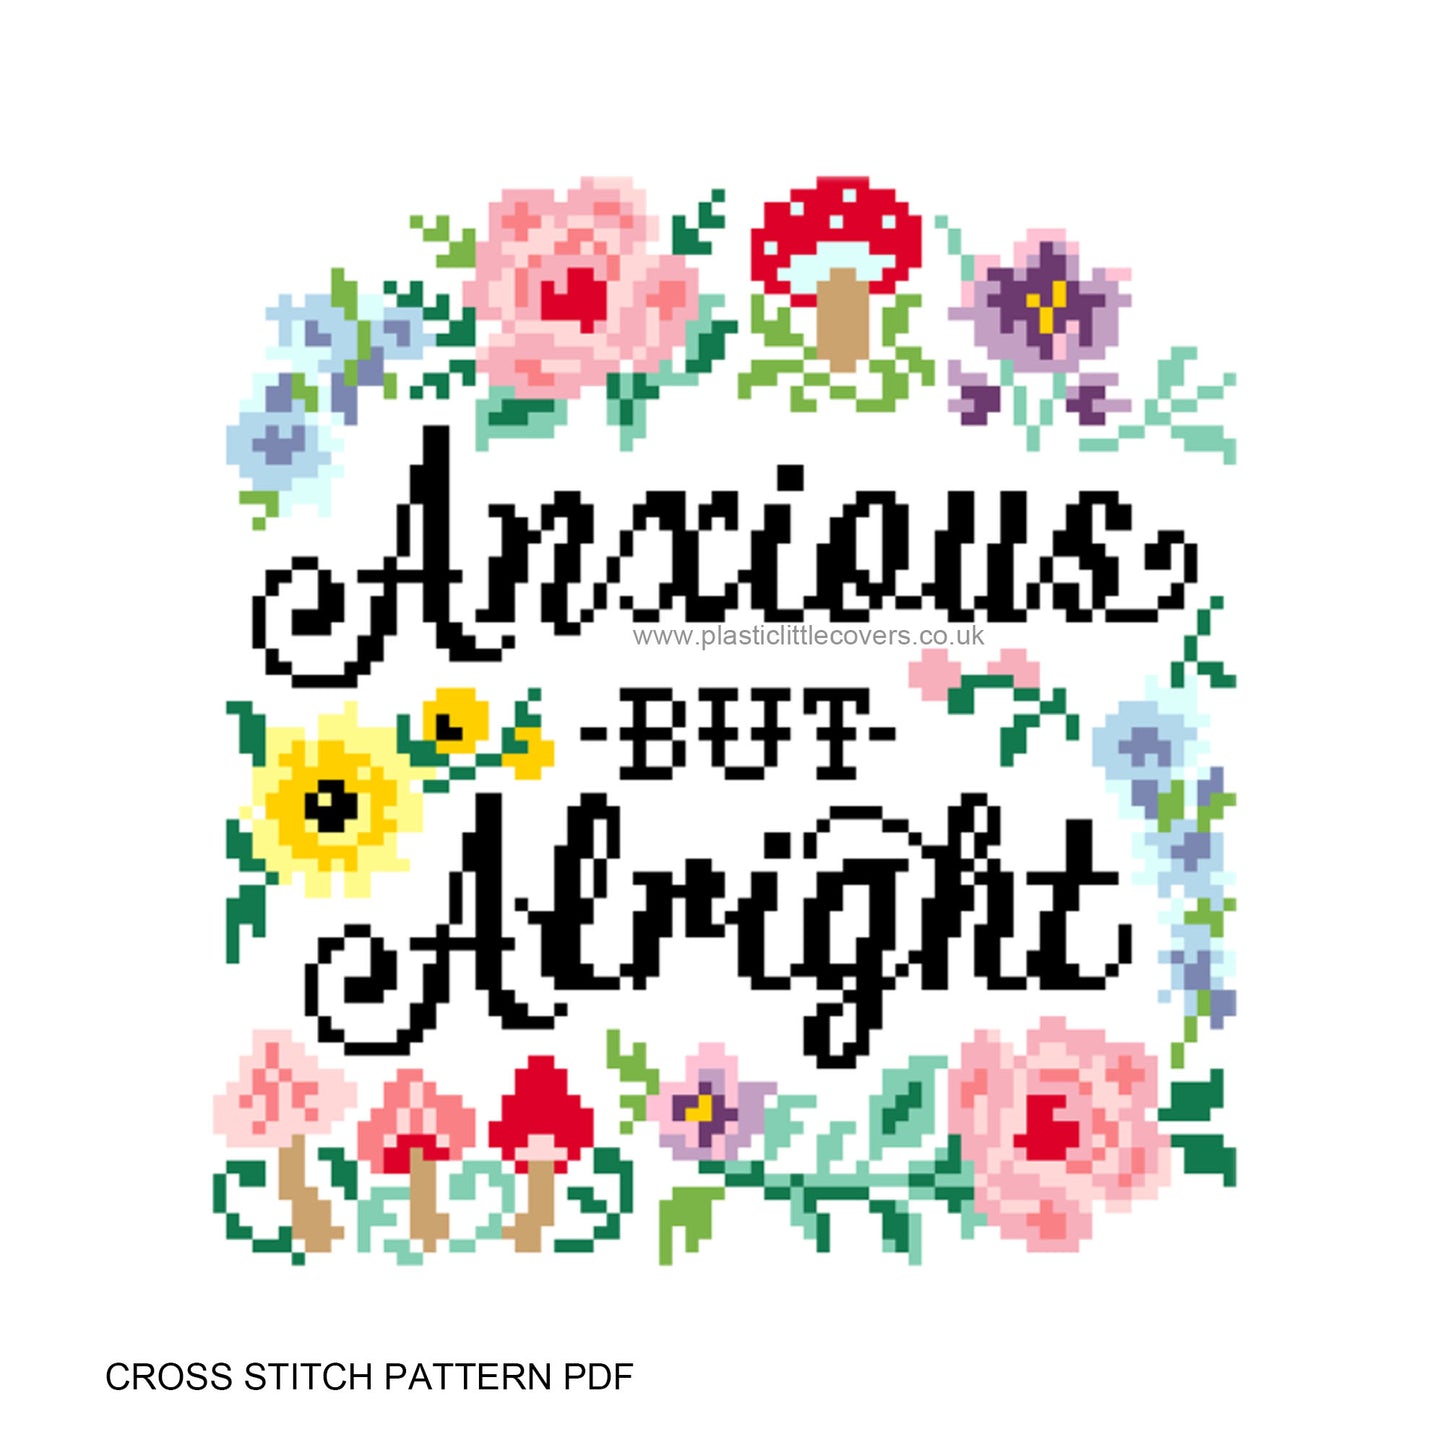 Anxious But Alright - Cross Stitch Pattern PDF.